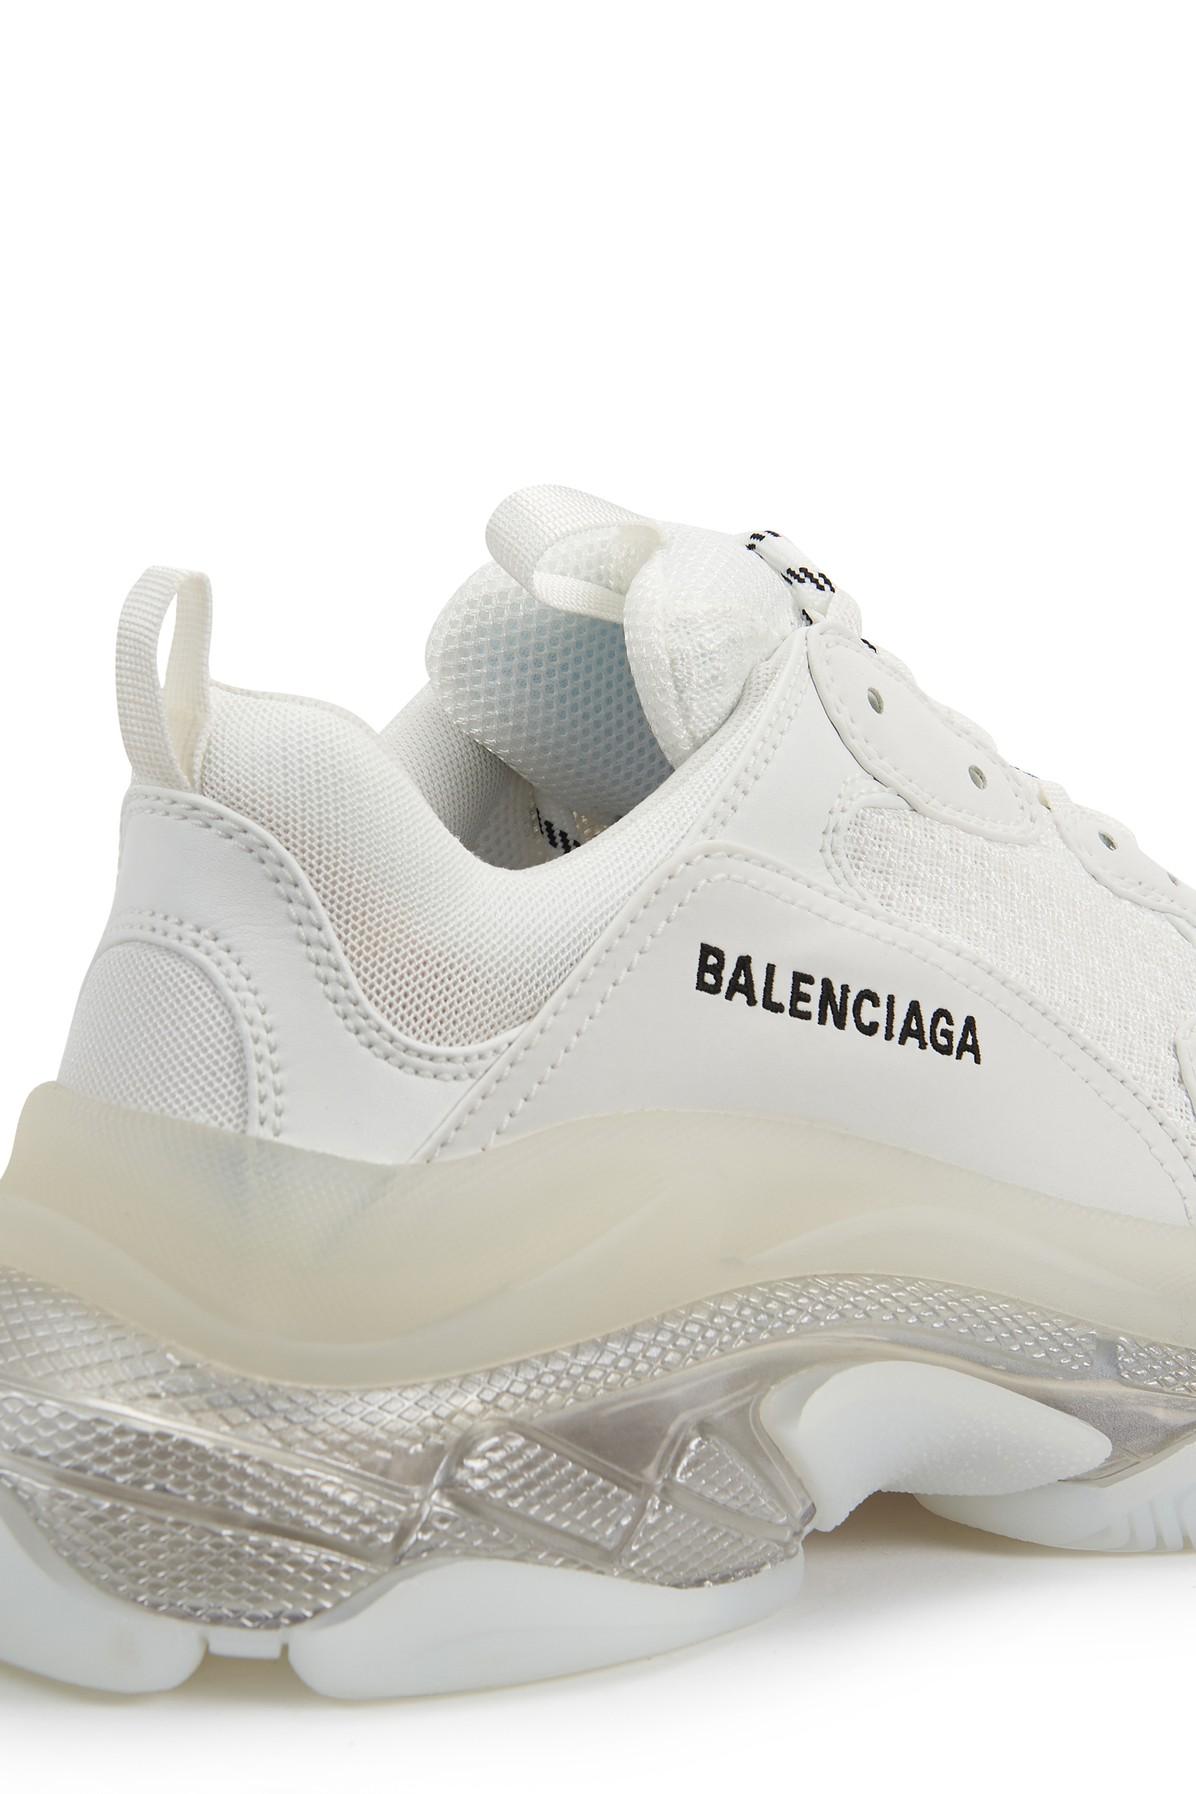 Balenciaga Triple S Clear Sole Sneakers in White | Lyst